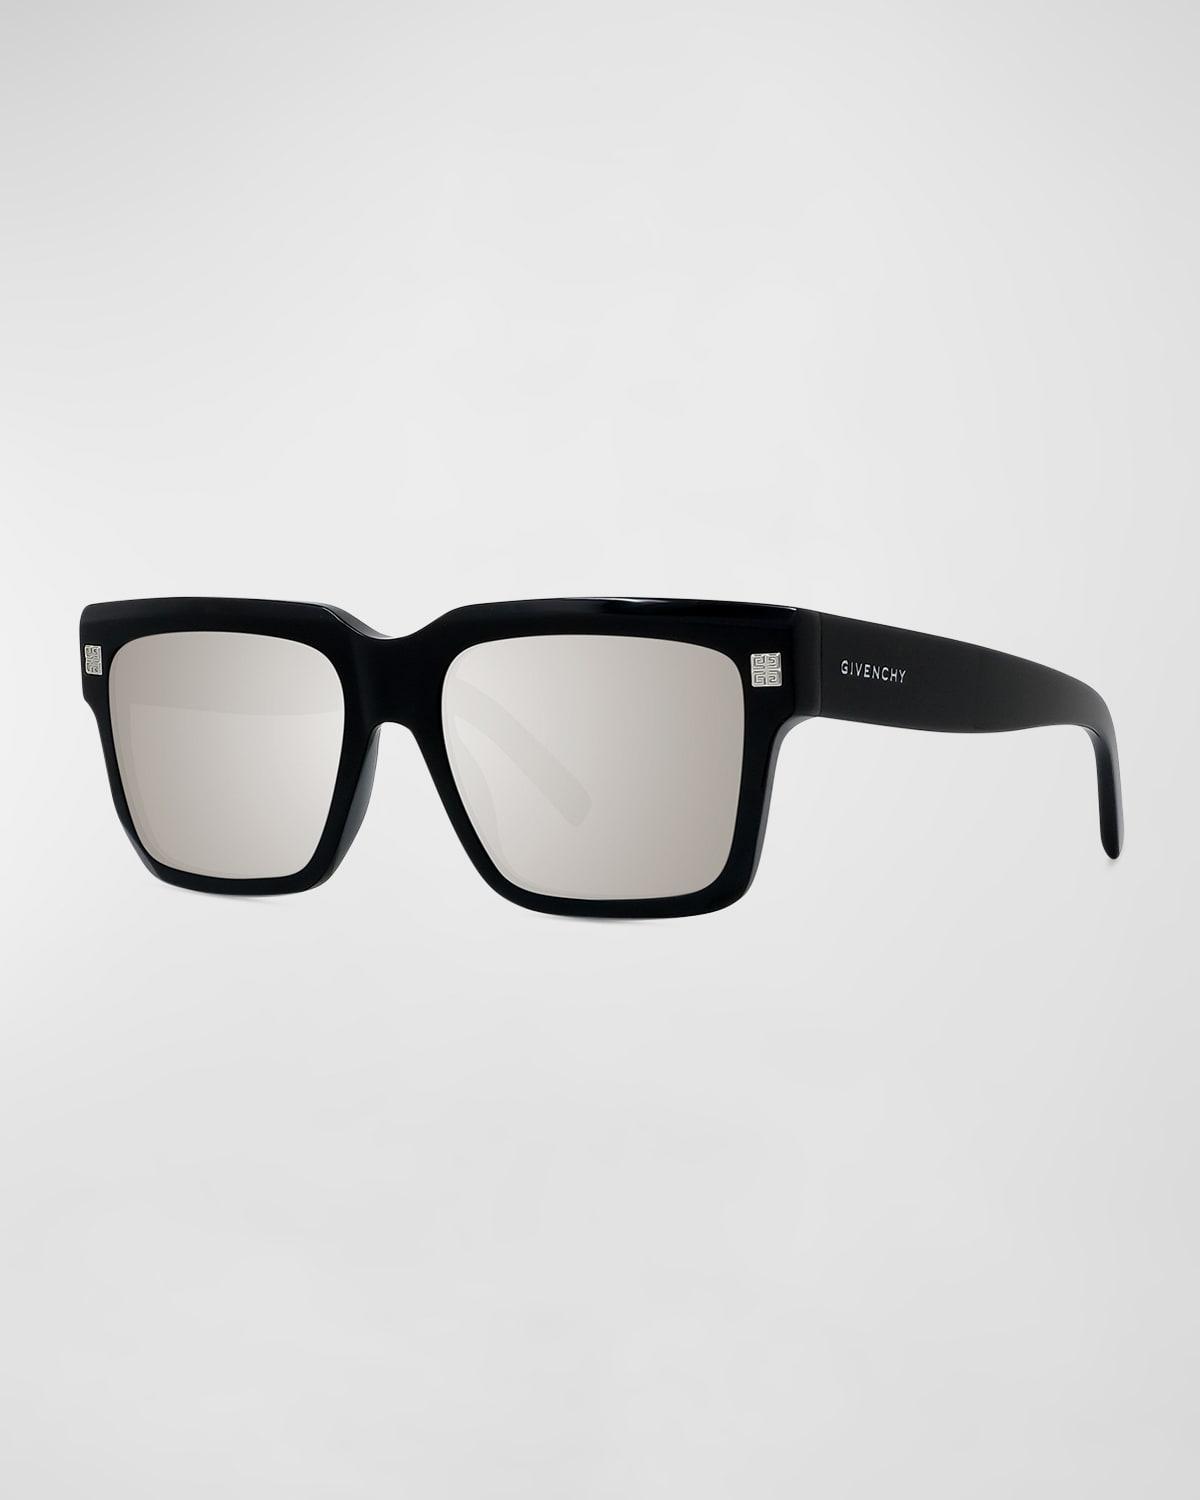 Givenchy Men's Gv Day Acetate Square Sunglasses In Shiny Black